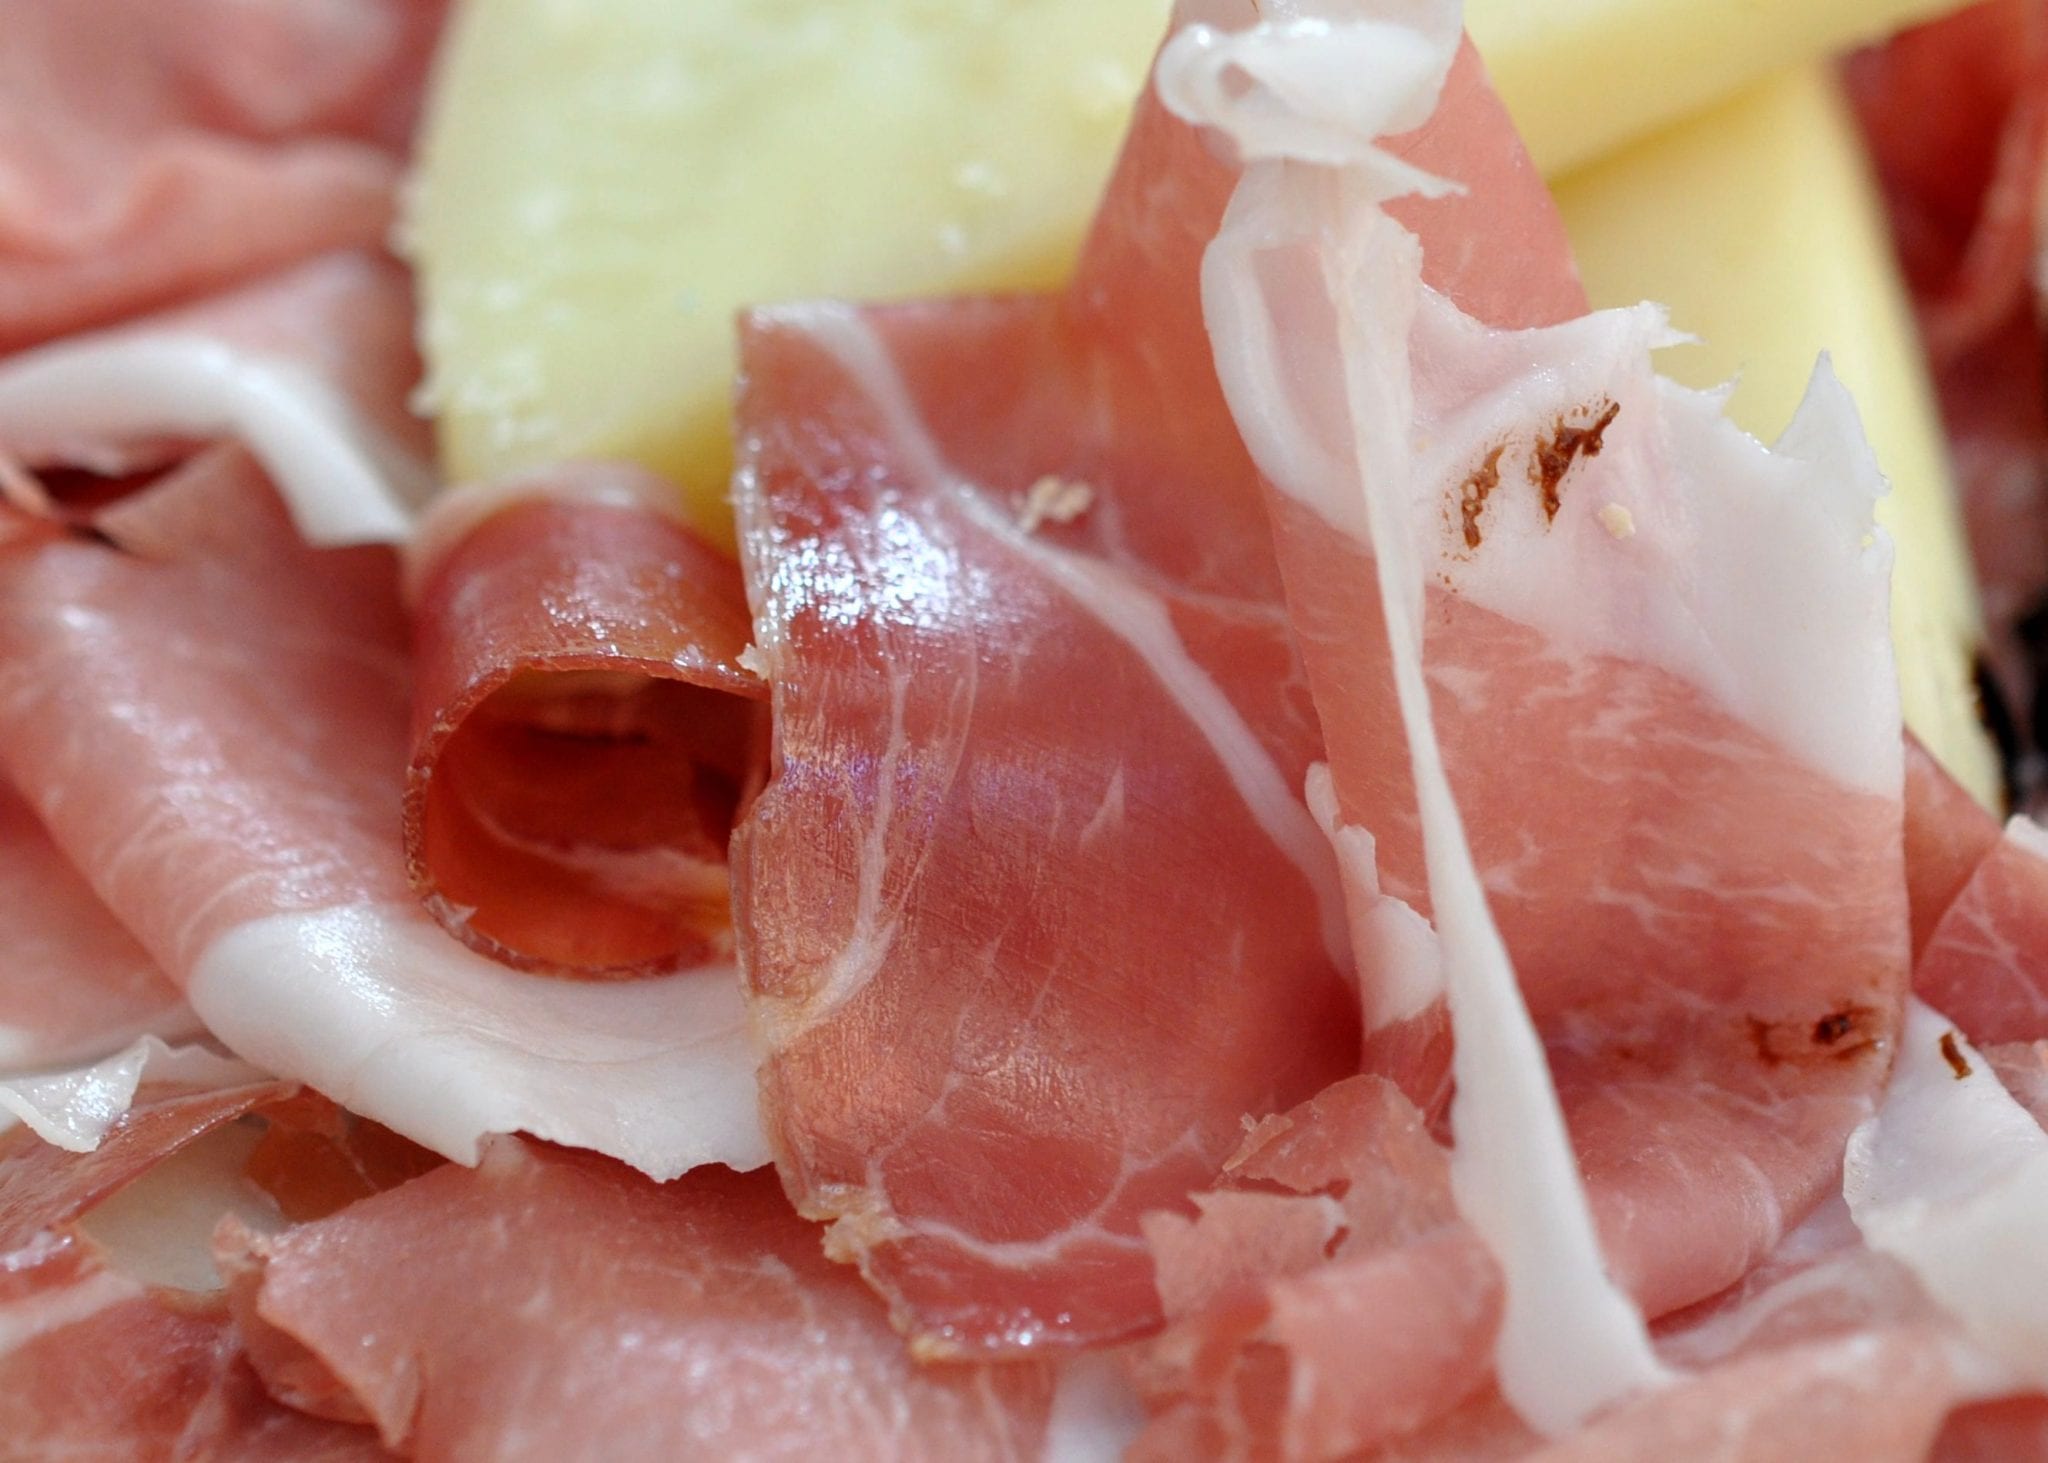 Two DOP foods of Italy: prosciutto crudo di San Daniele, and Parmigiano Reggiano